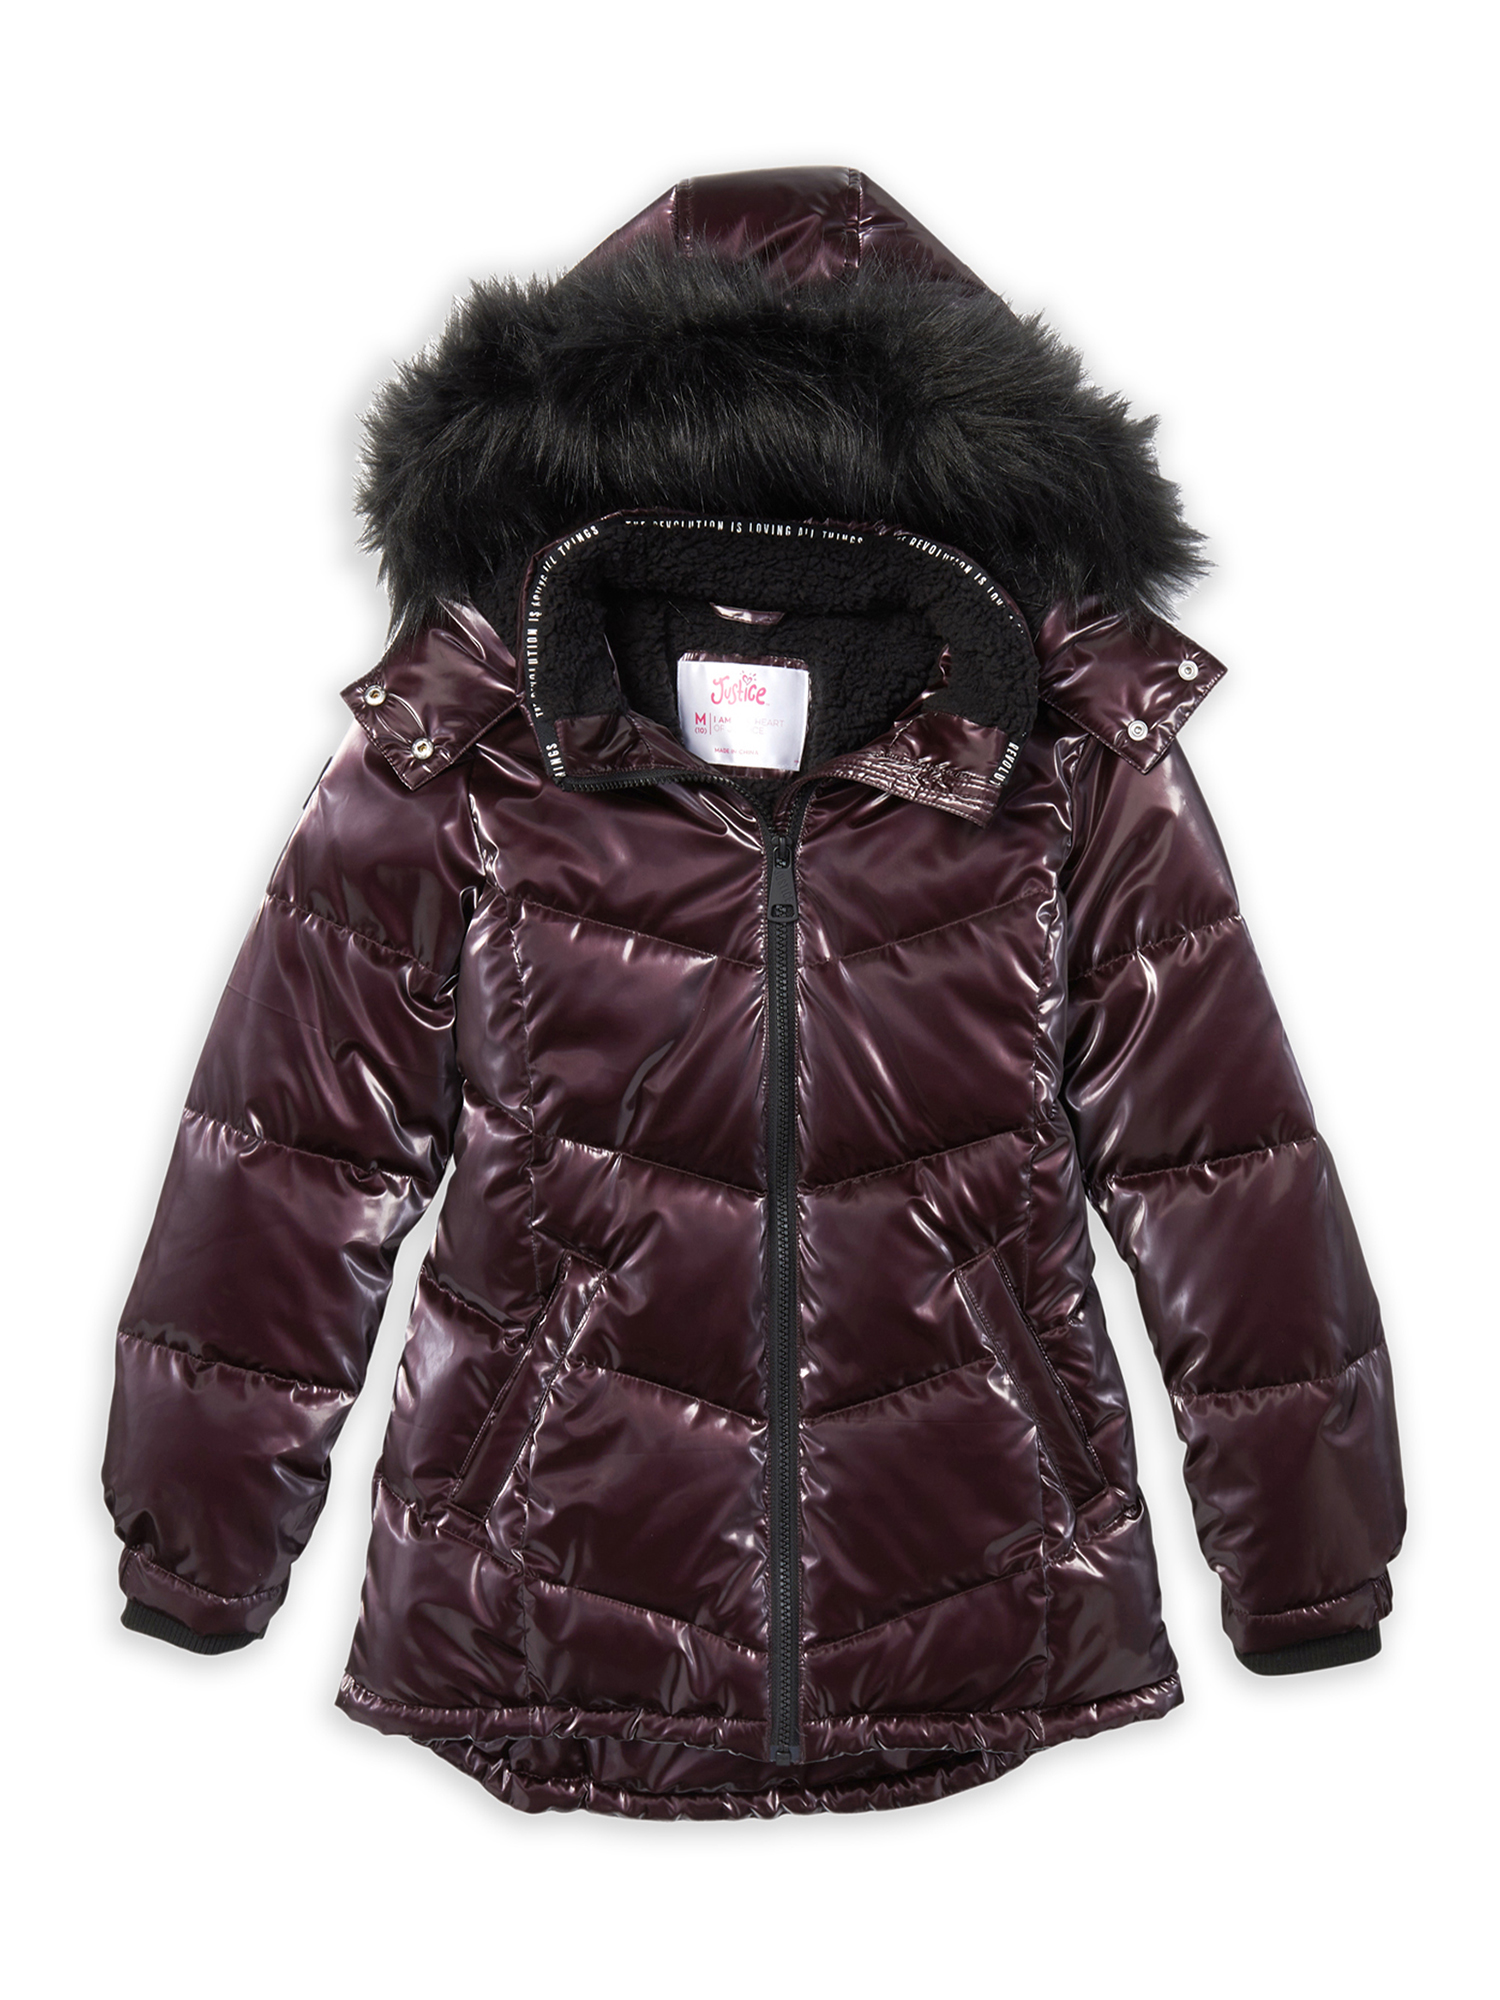 ZSHOW Girls Winter Coat Water Resistant Long Parka Warm Hooded Puffer Jacket